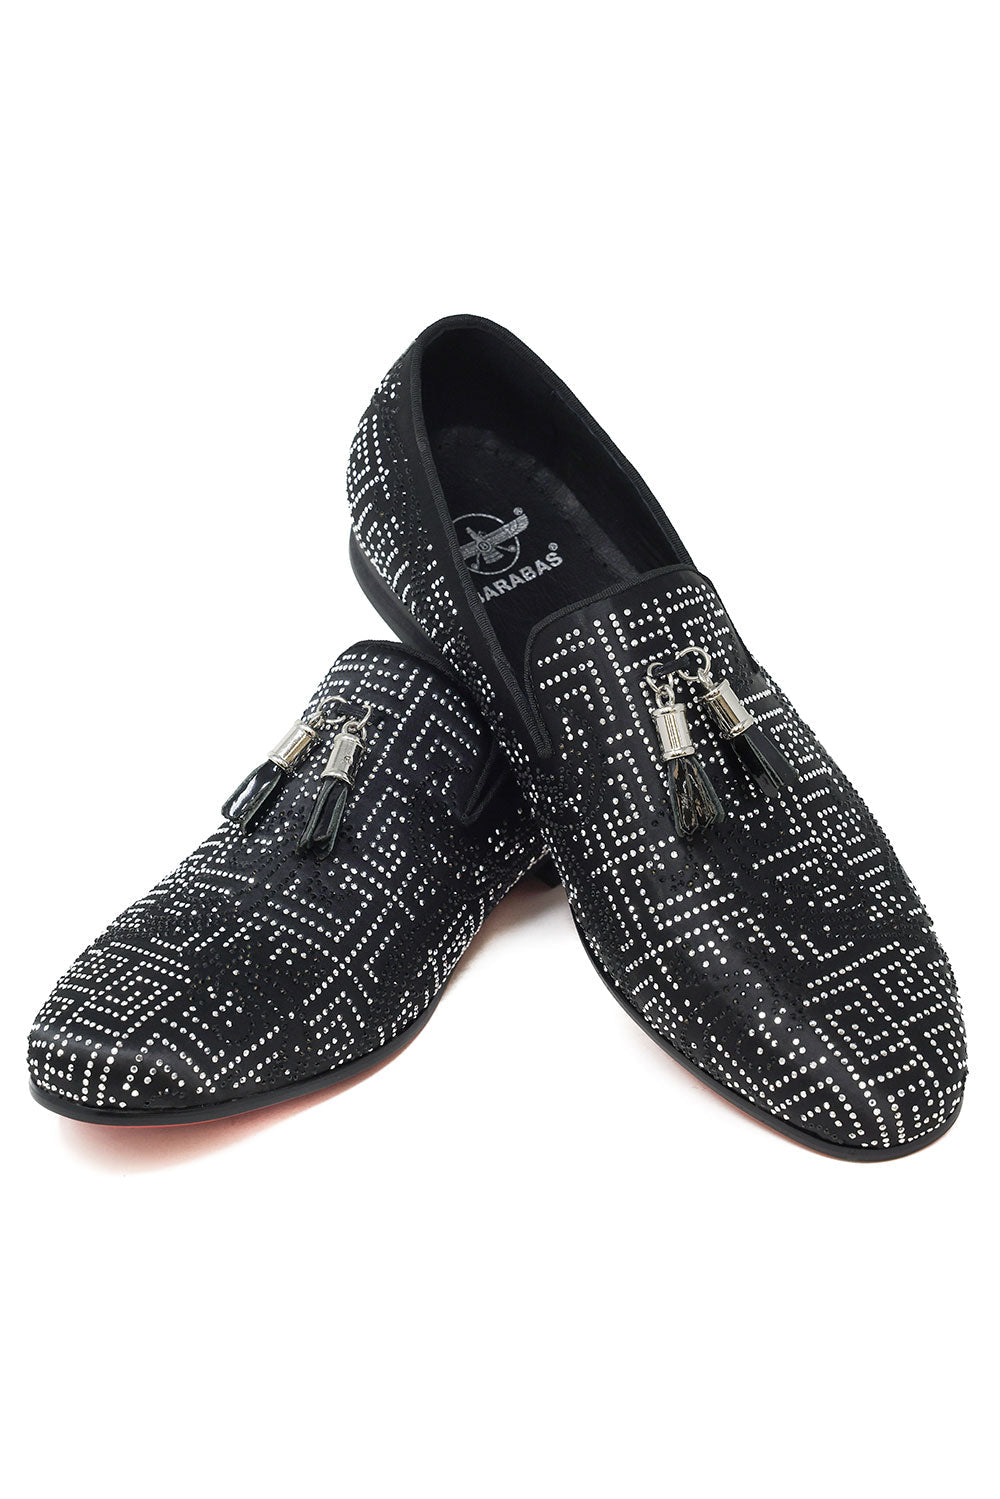 Barabas Men's Greek Key Pattern Tassel Slip On Loafer Shoes 2SH3102ST Black Silver